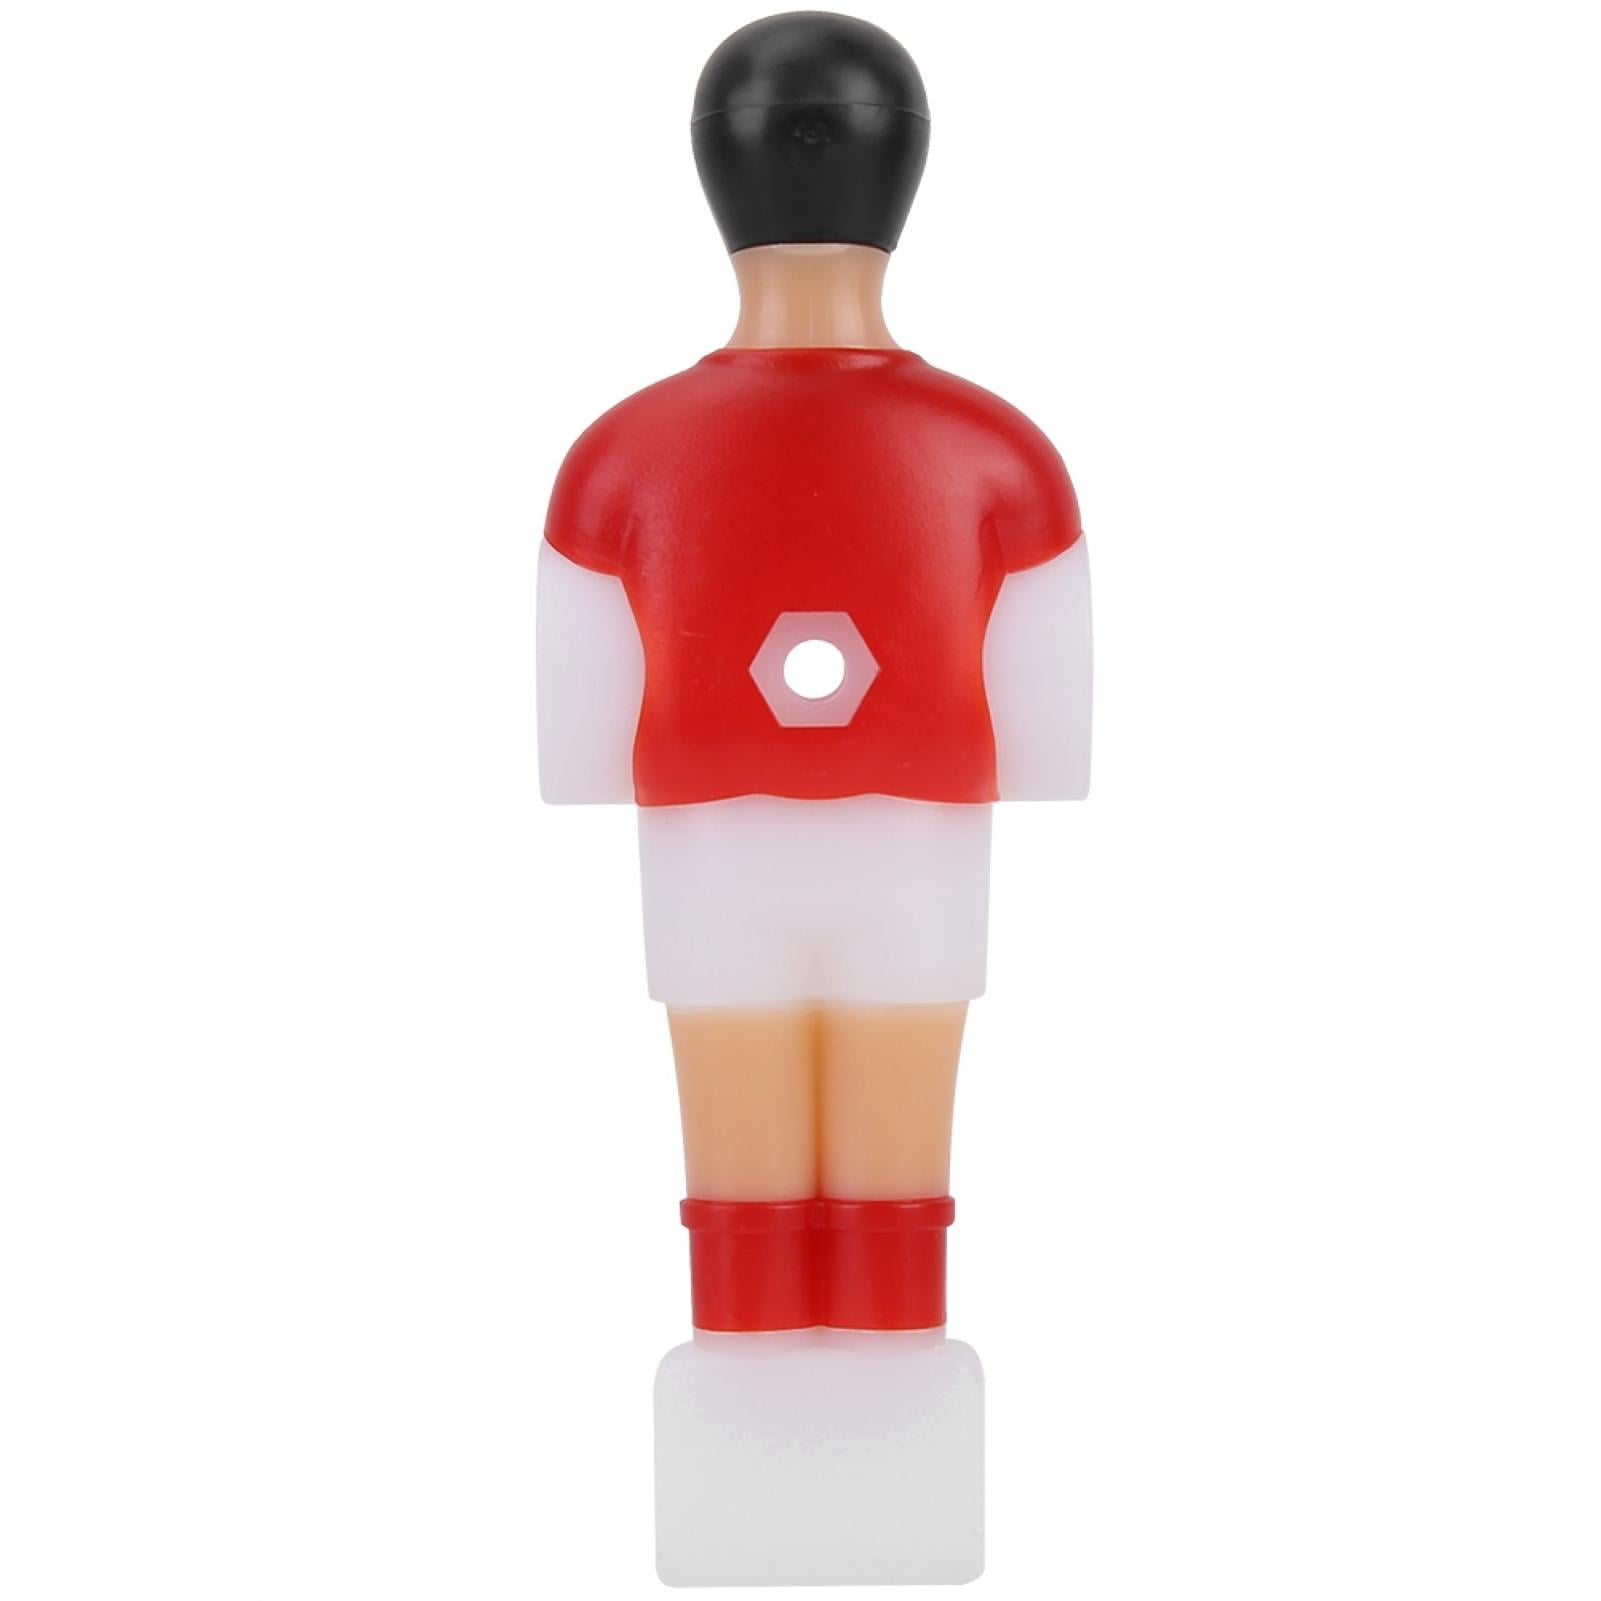 Foosball Player Mini Humanoid Plastic Doll Table Football Machine Soccer Games 